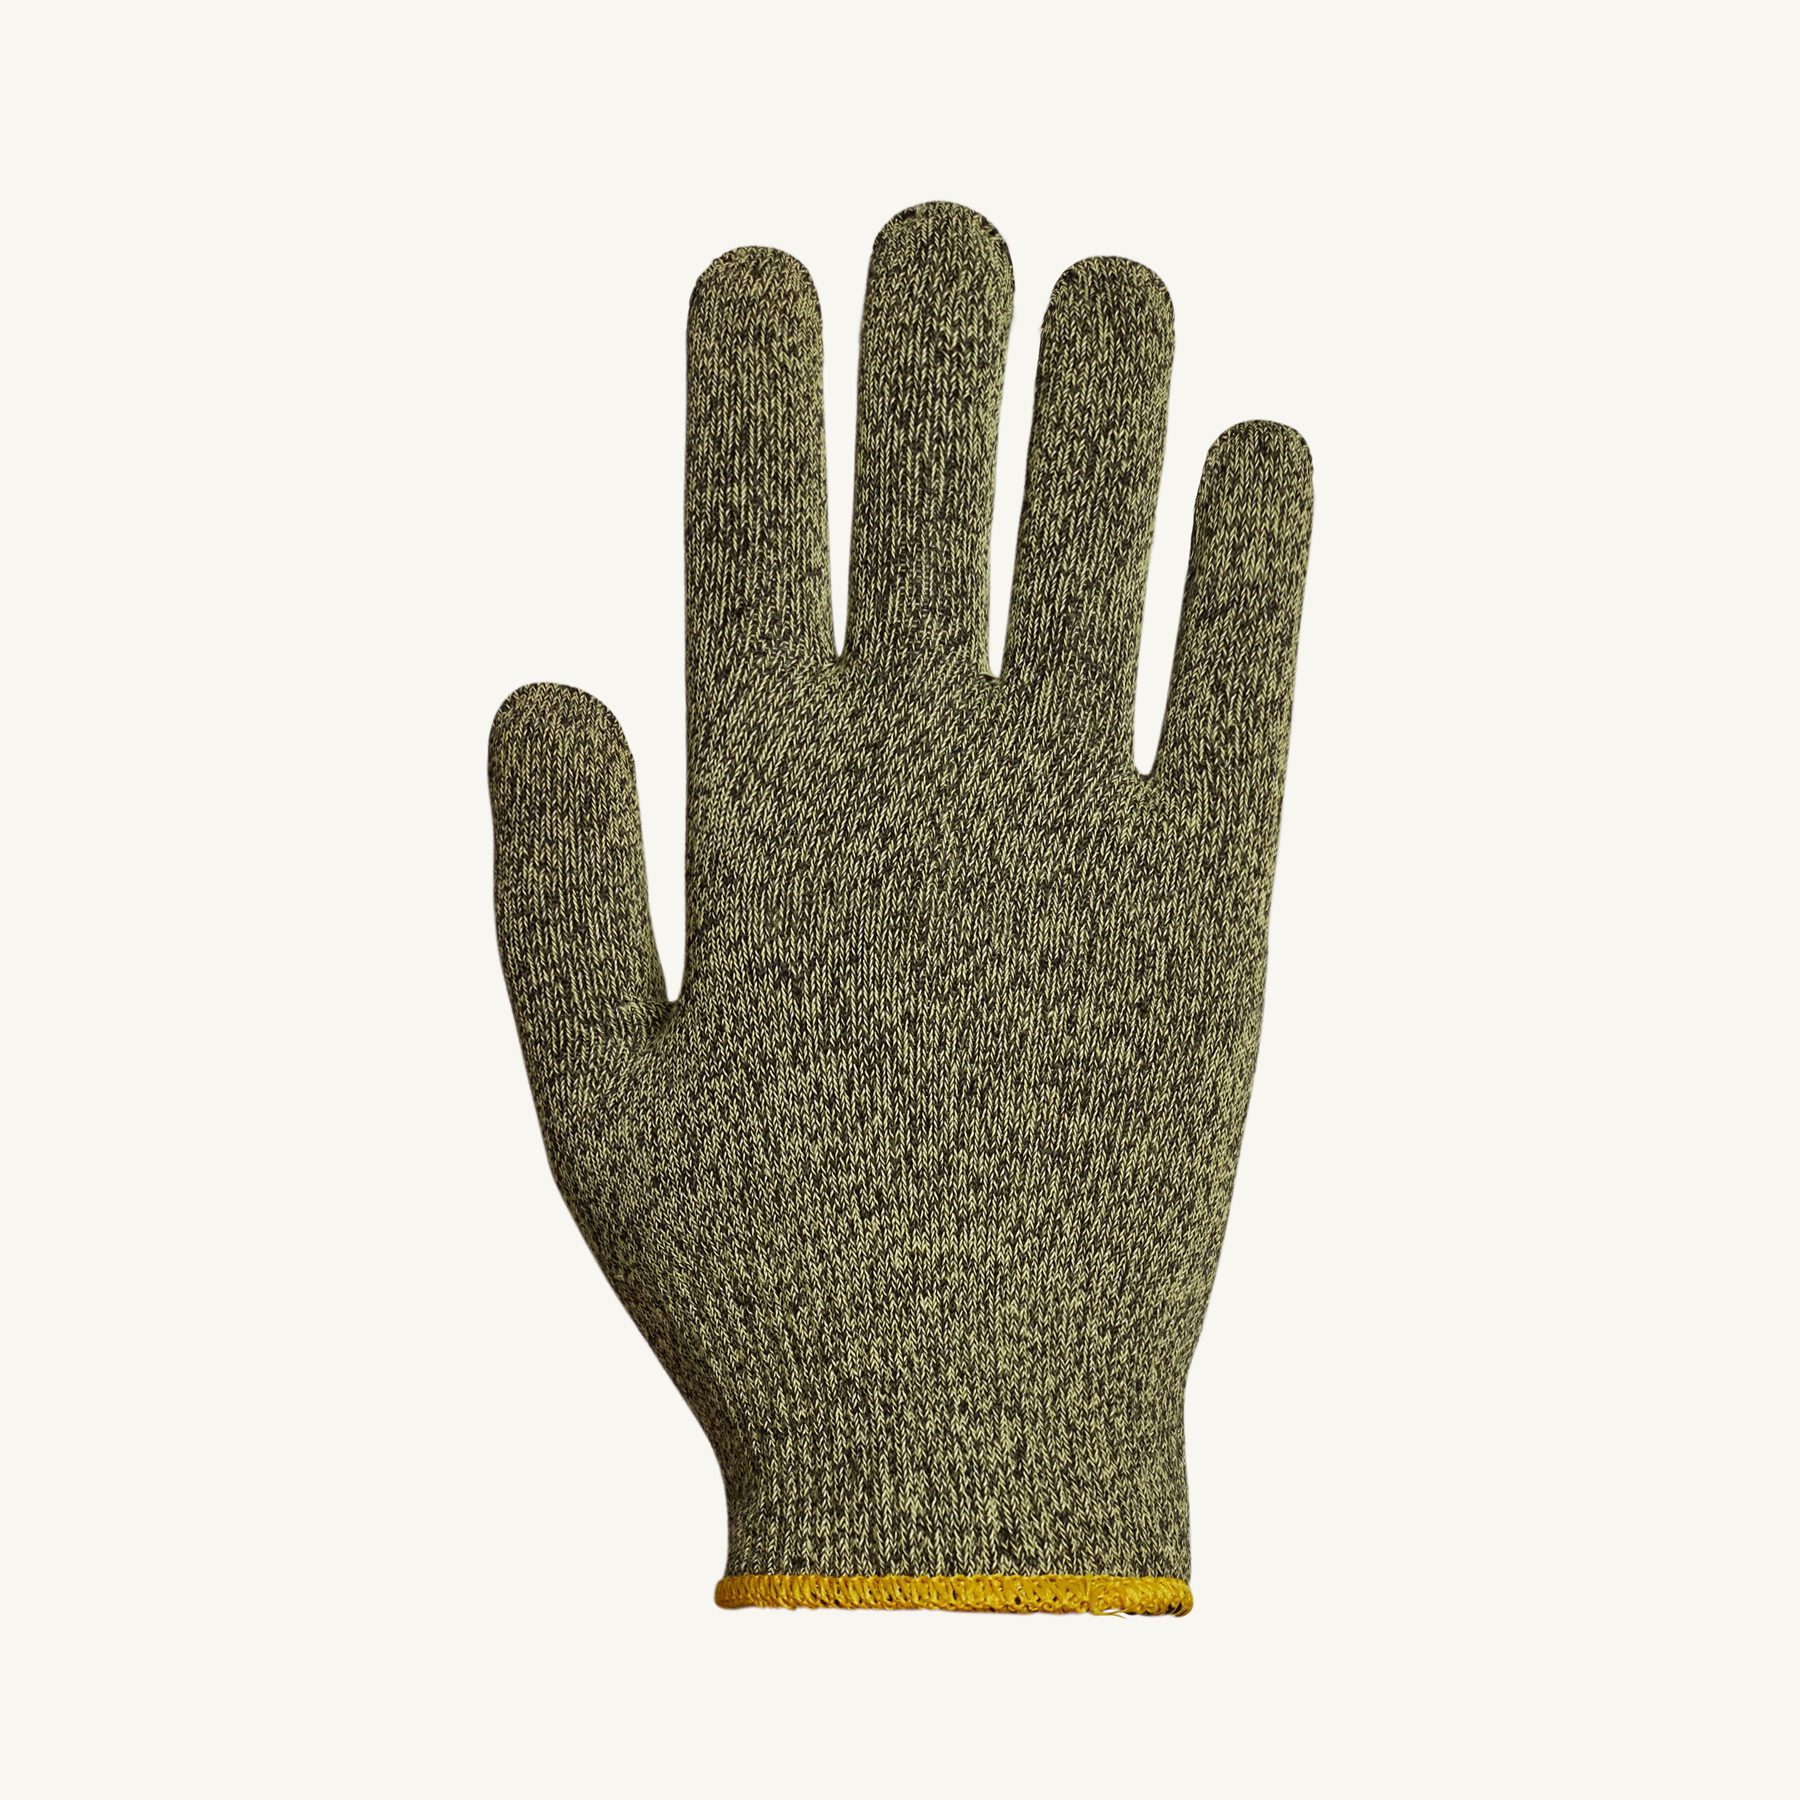 Dirty Rigger Gloves Protector Framer fit - Kevlar reinforced gloves with 3  cut fingers